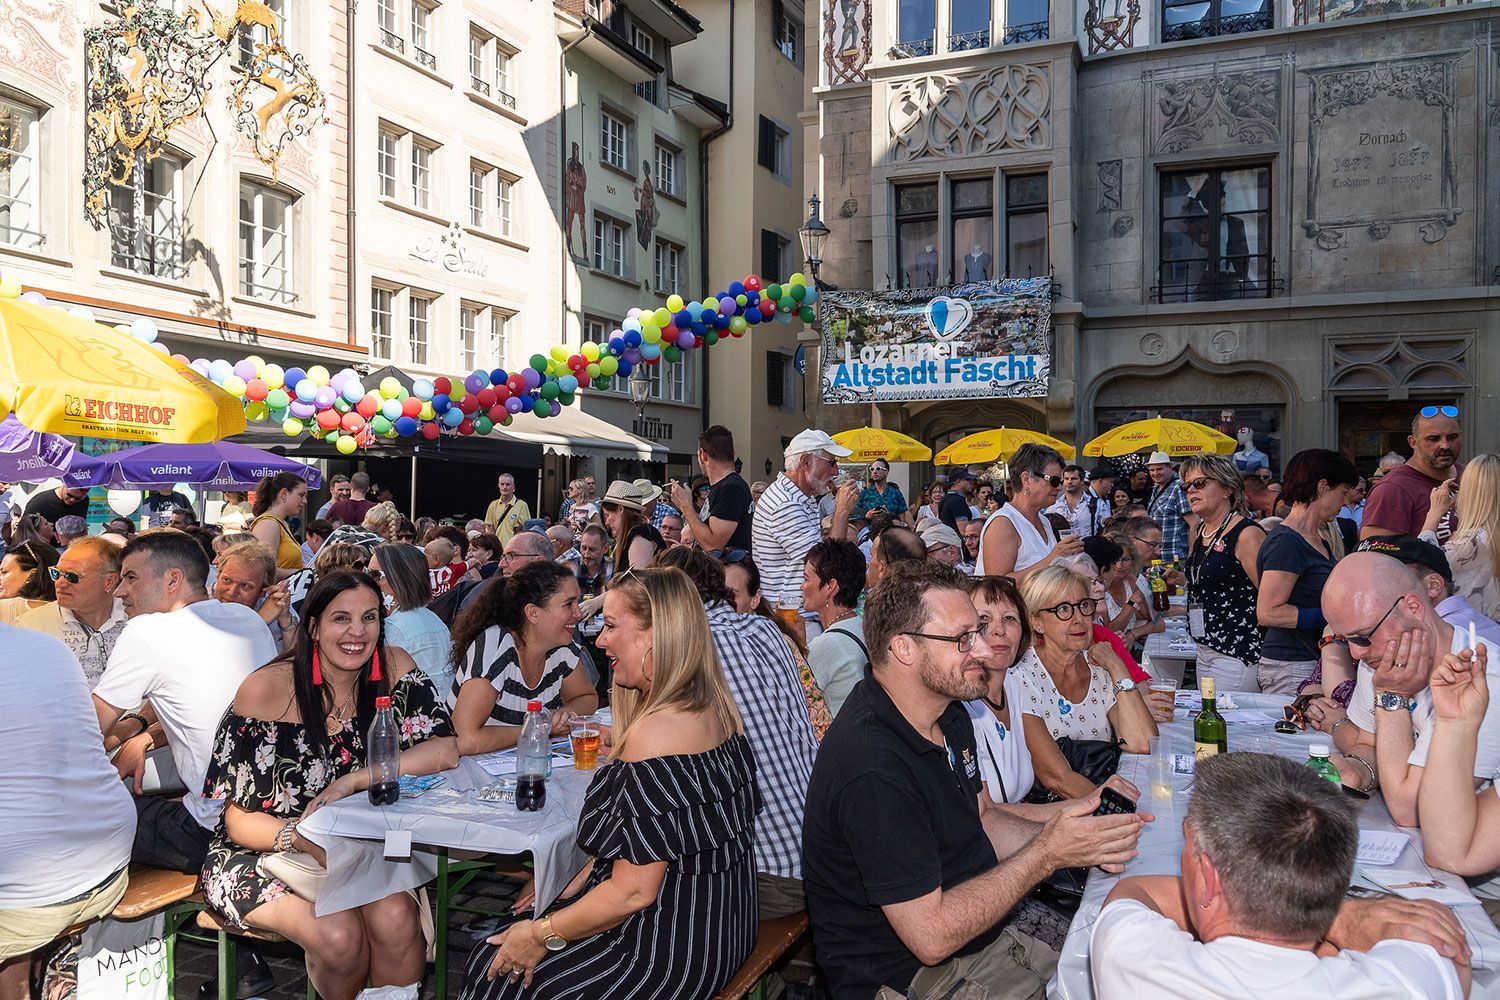 Stadtfest Luzern